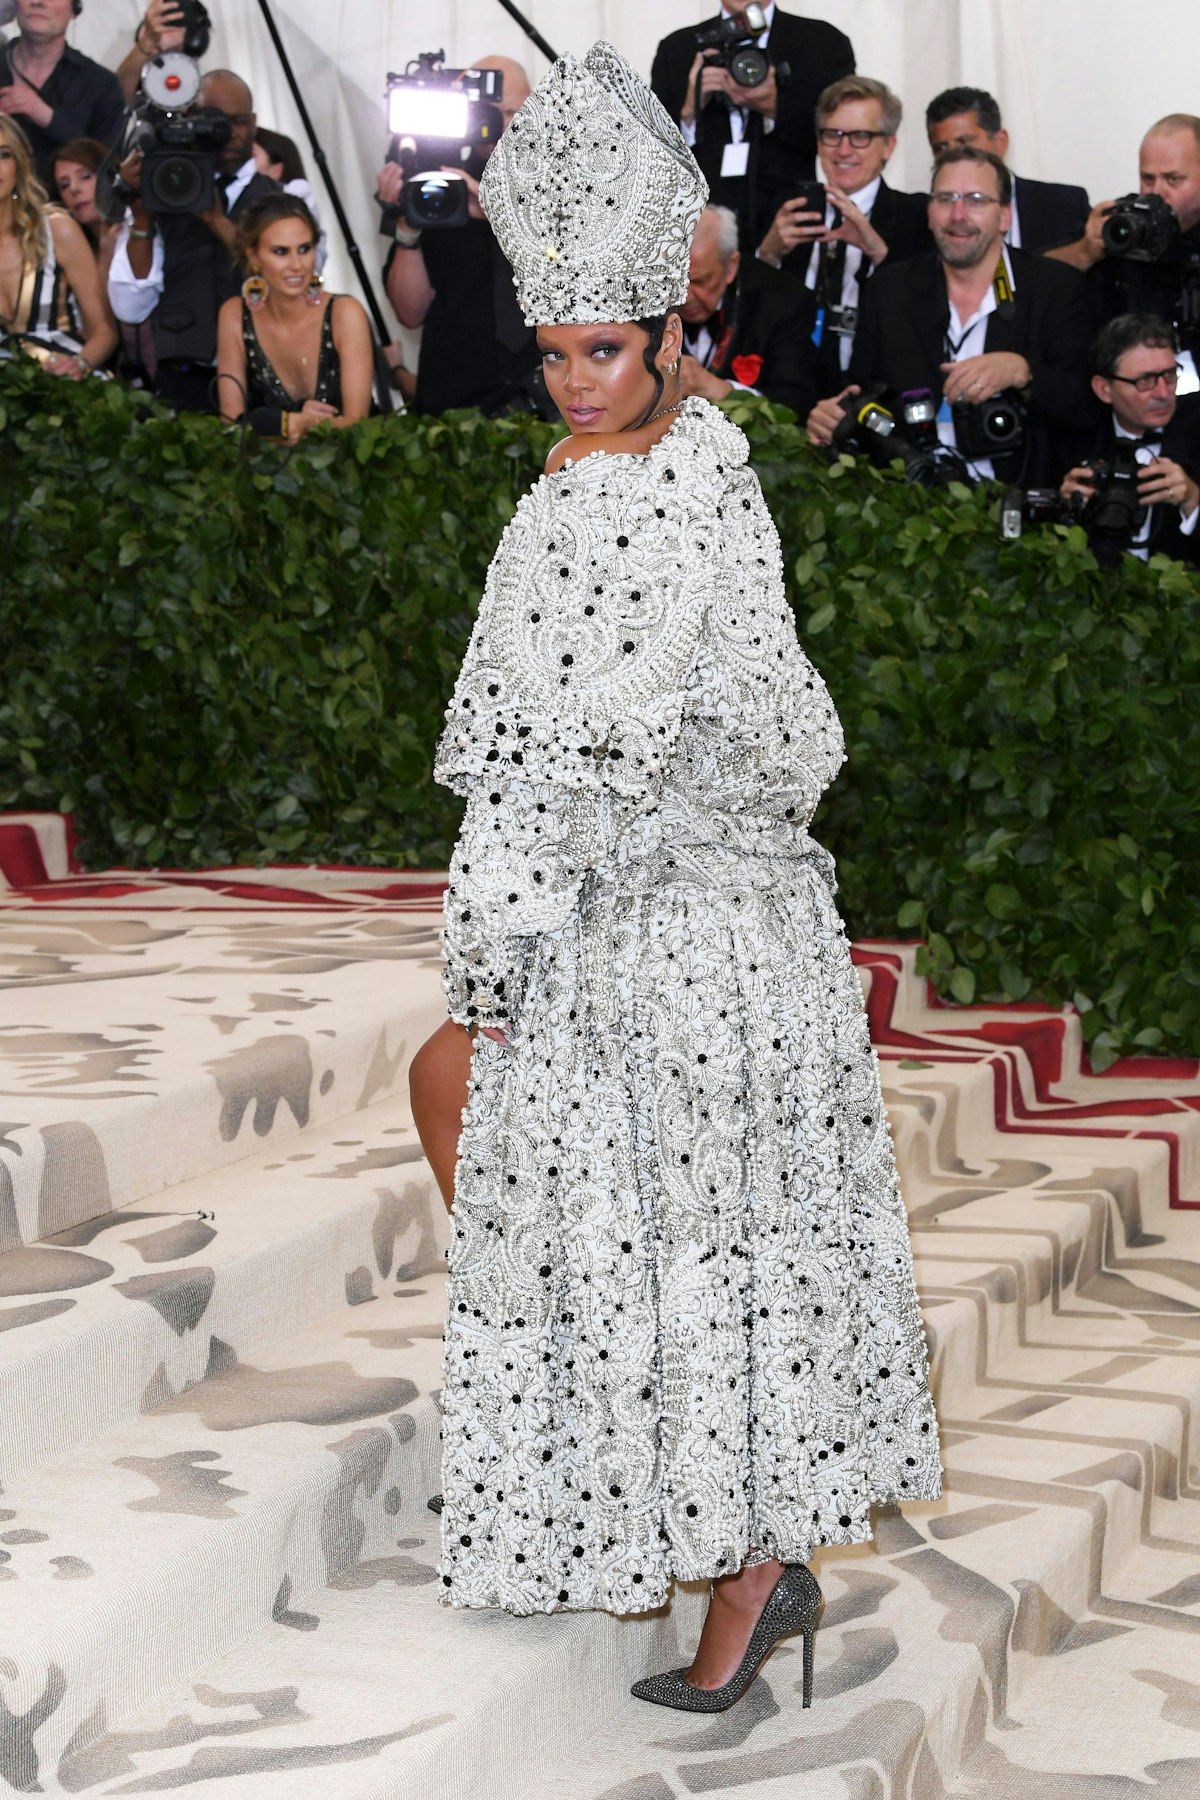 Rihanna Wears Pope Outfit To The Met Gala - Grazia | Celebrity | Grazia